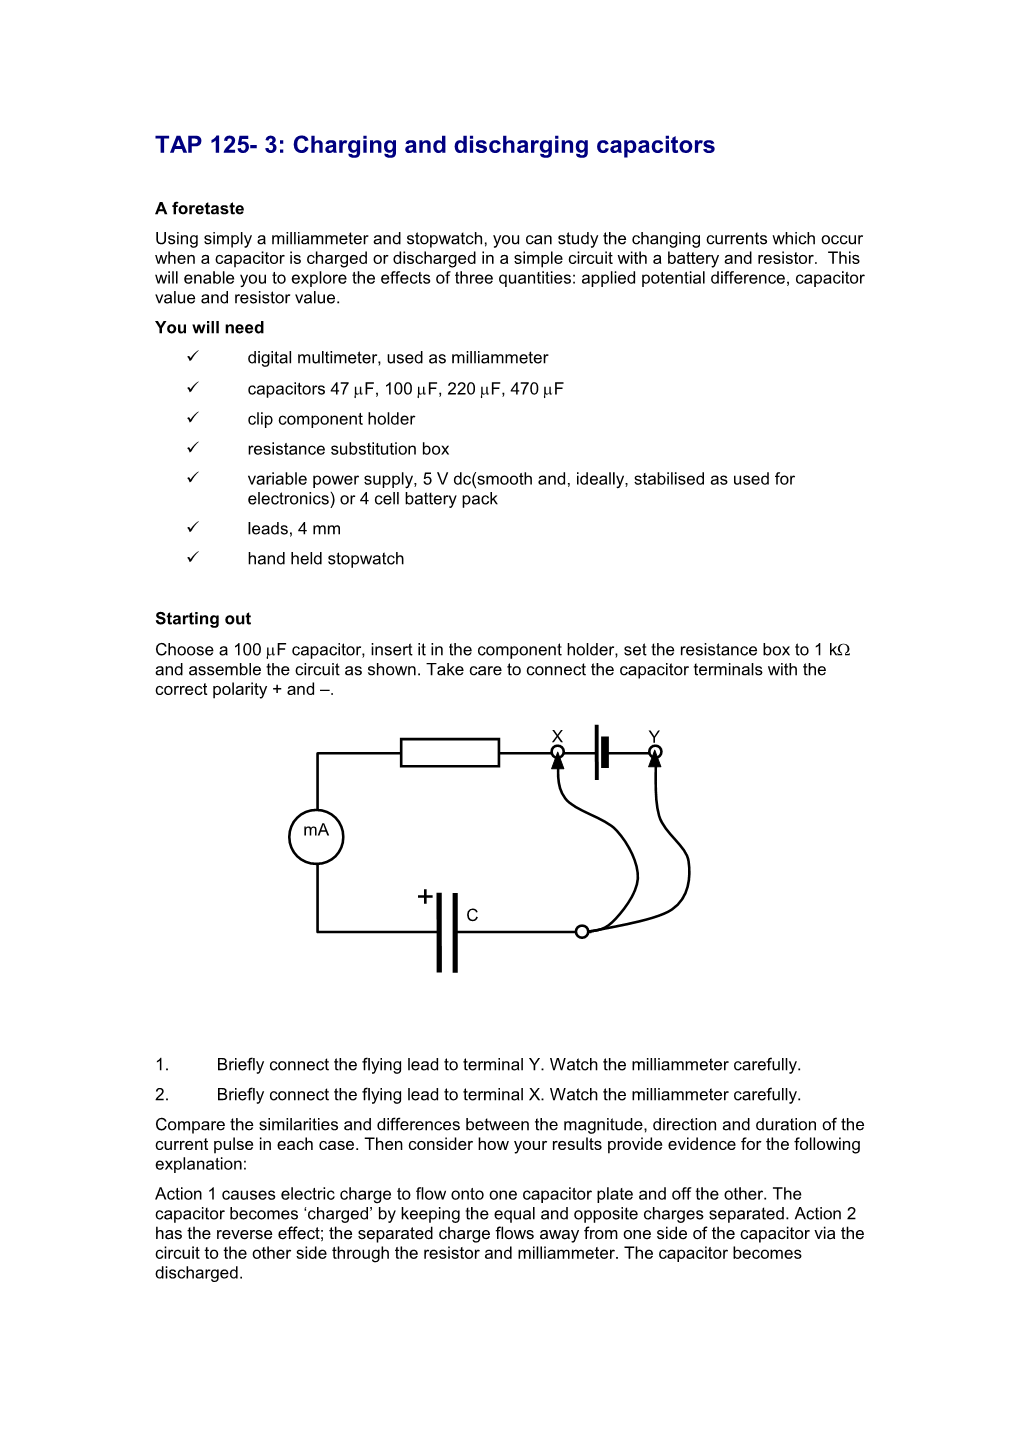 TAP 125- 3: Charging and Discharging Capacitors